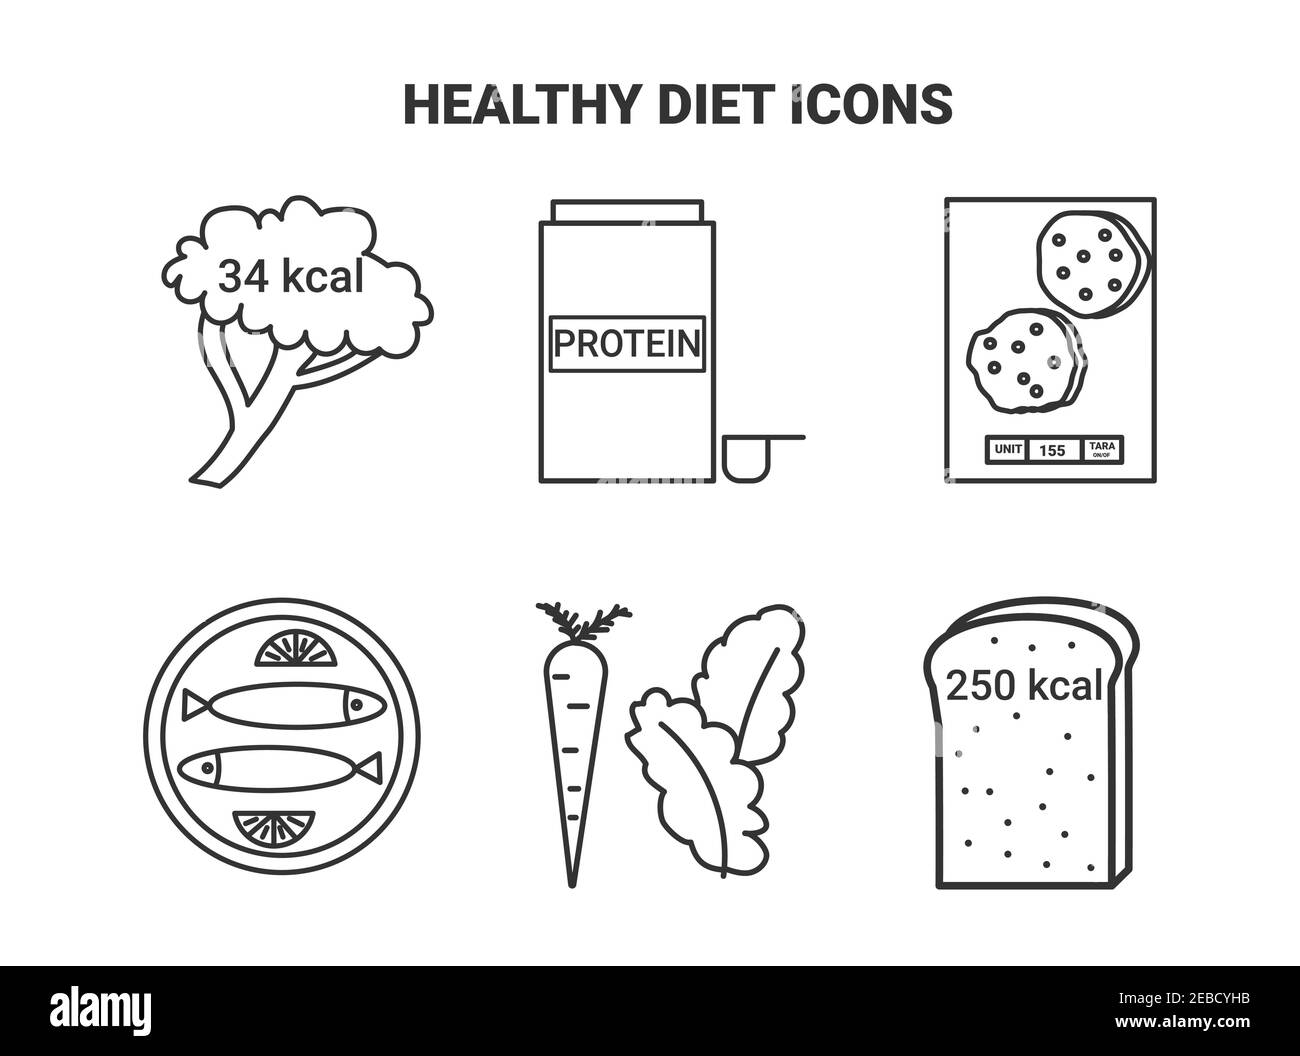 Health diet icons set for webdesign Stock Vector